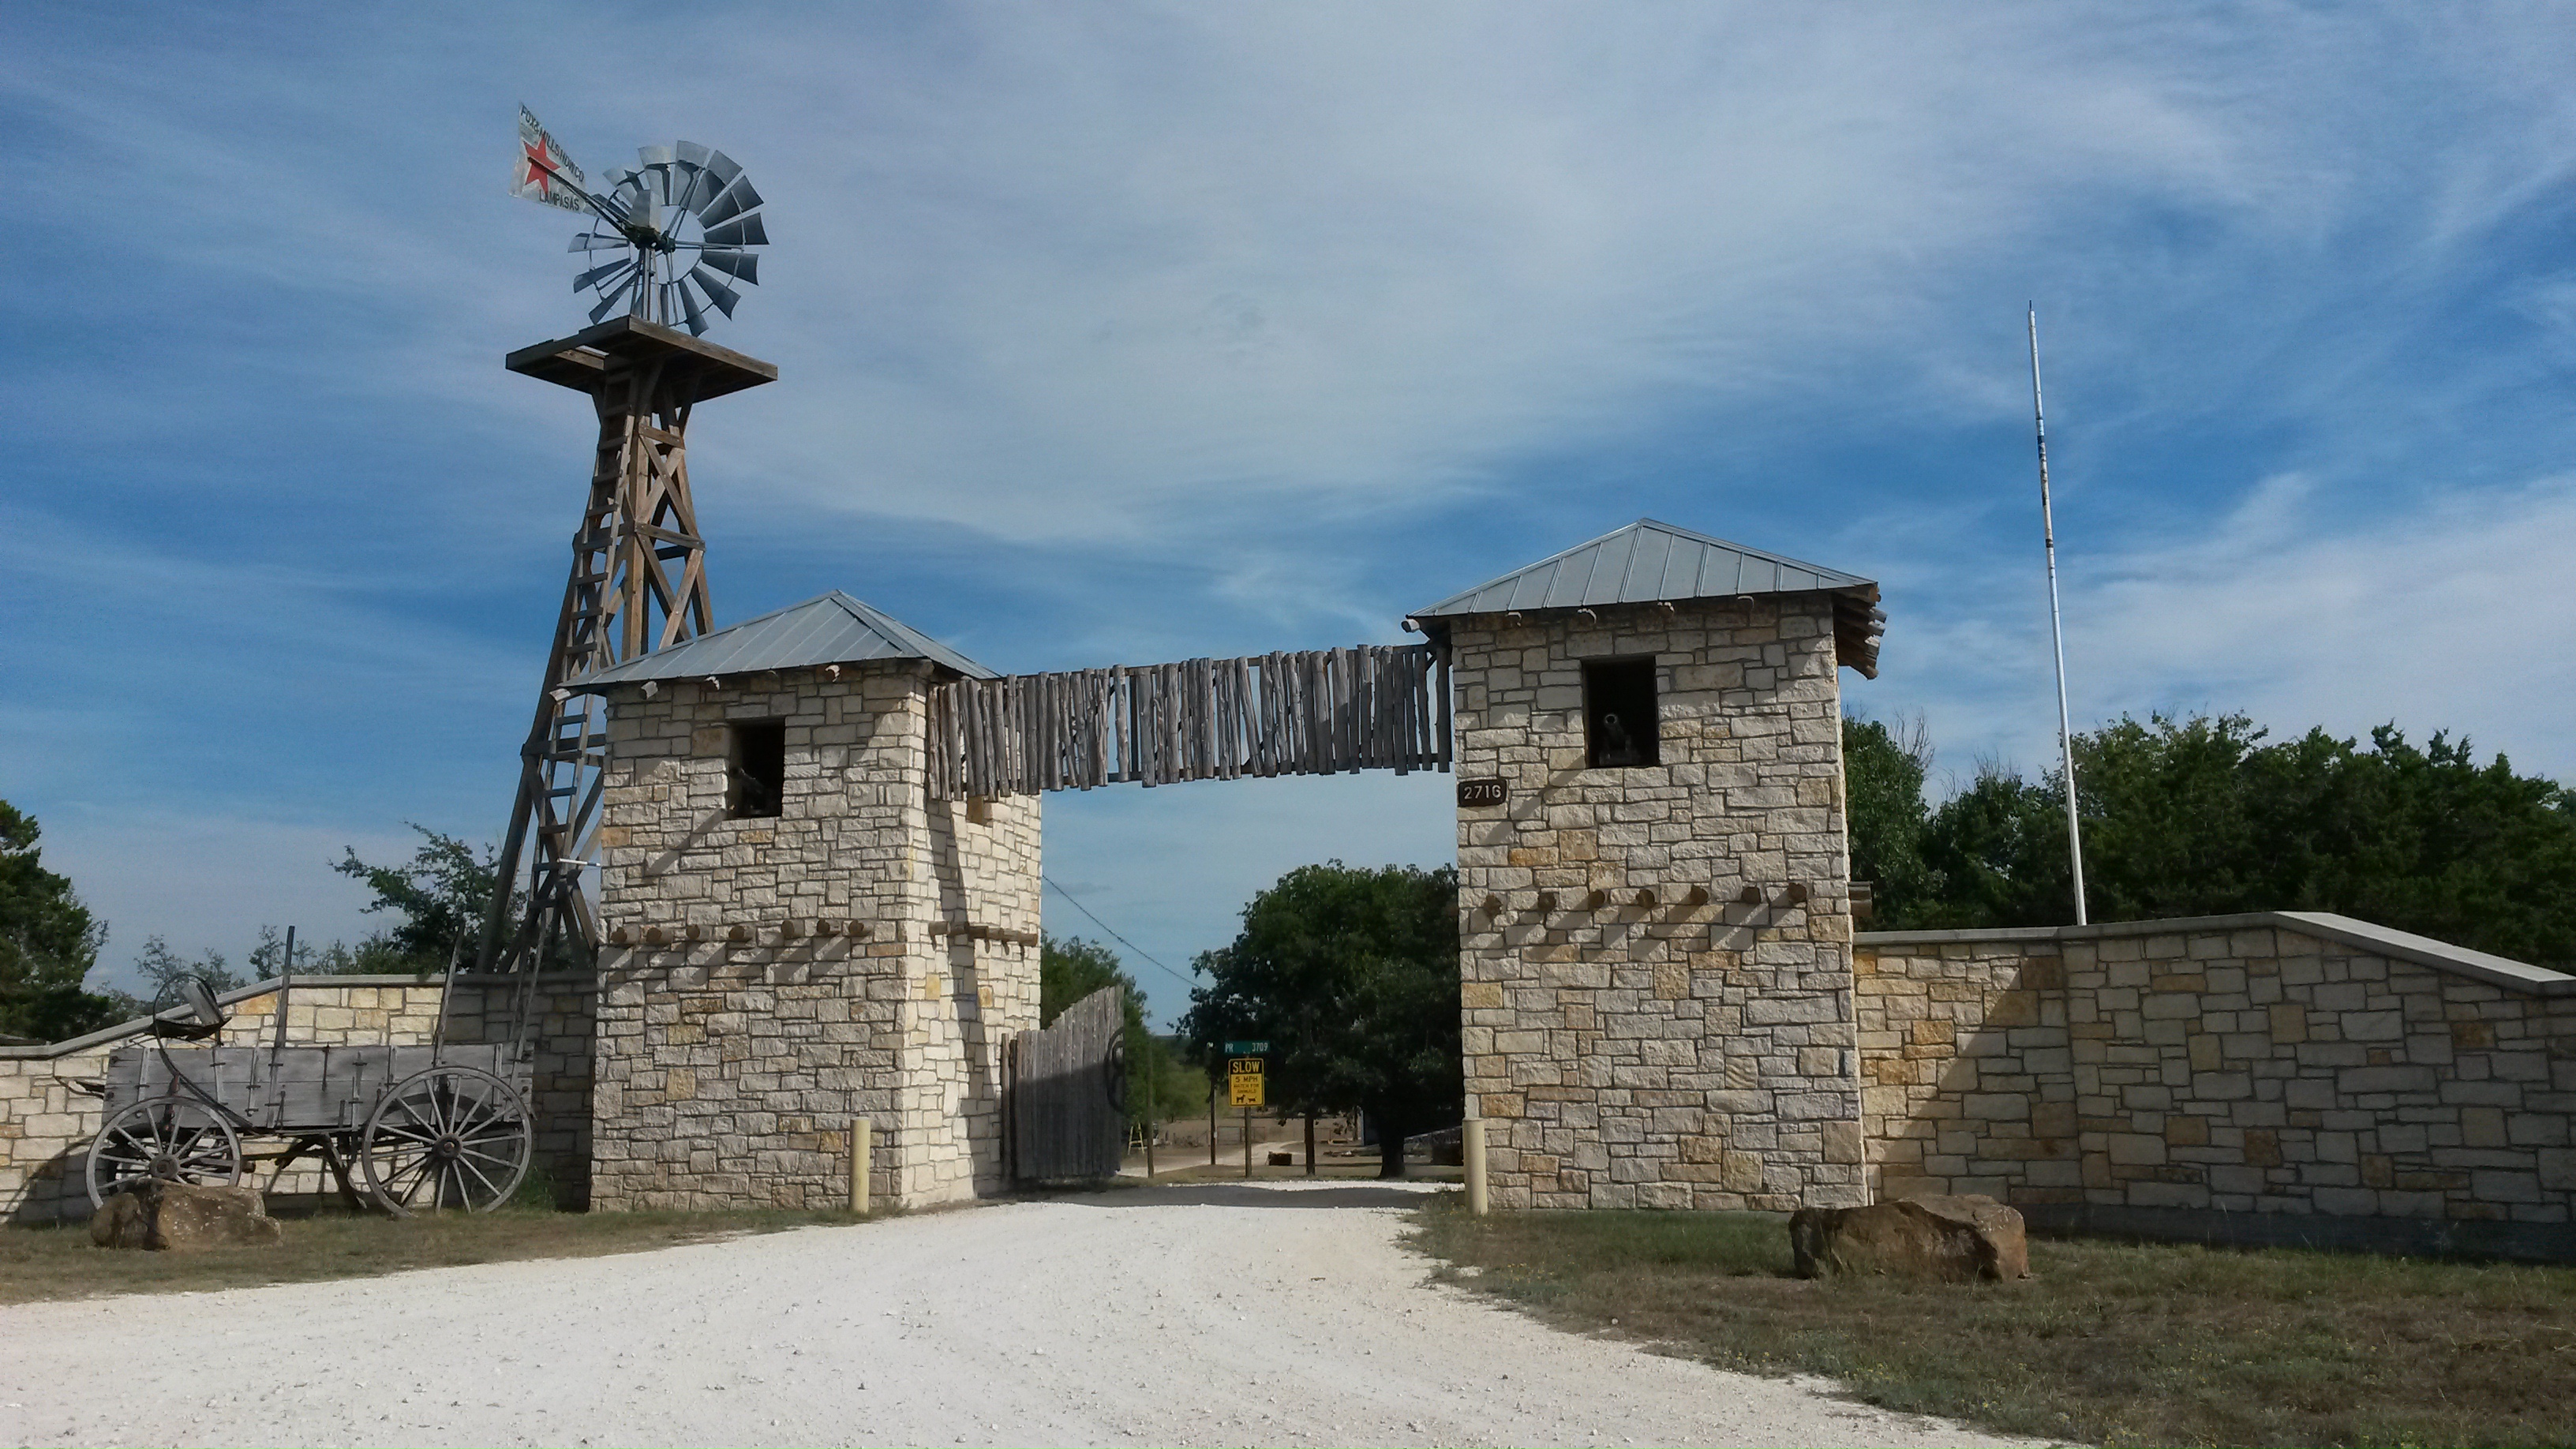 Ranch entrance